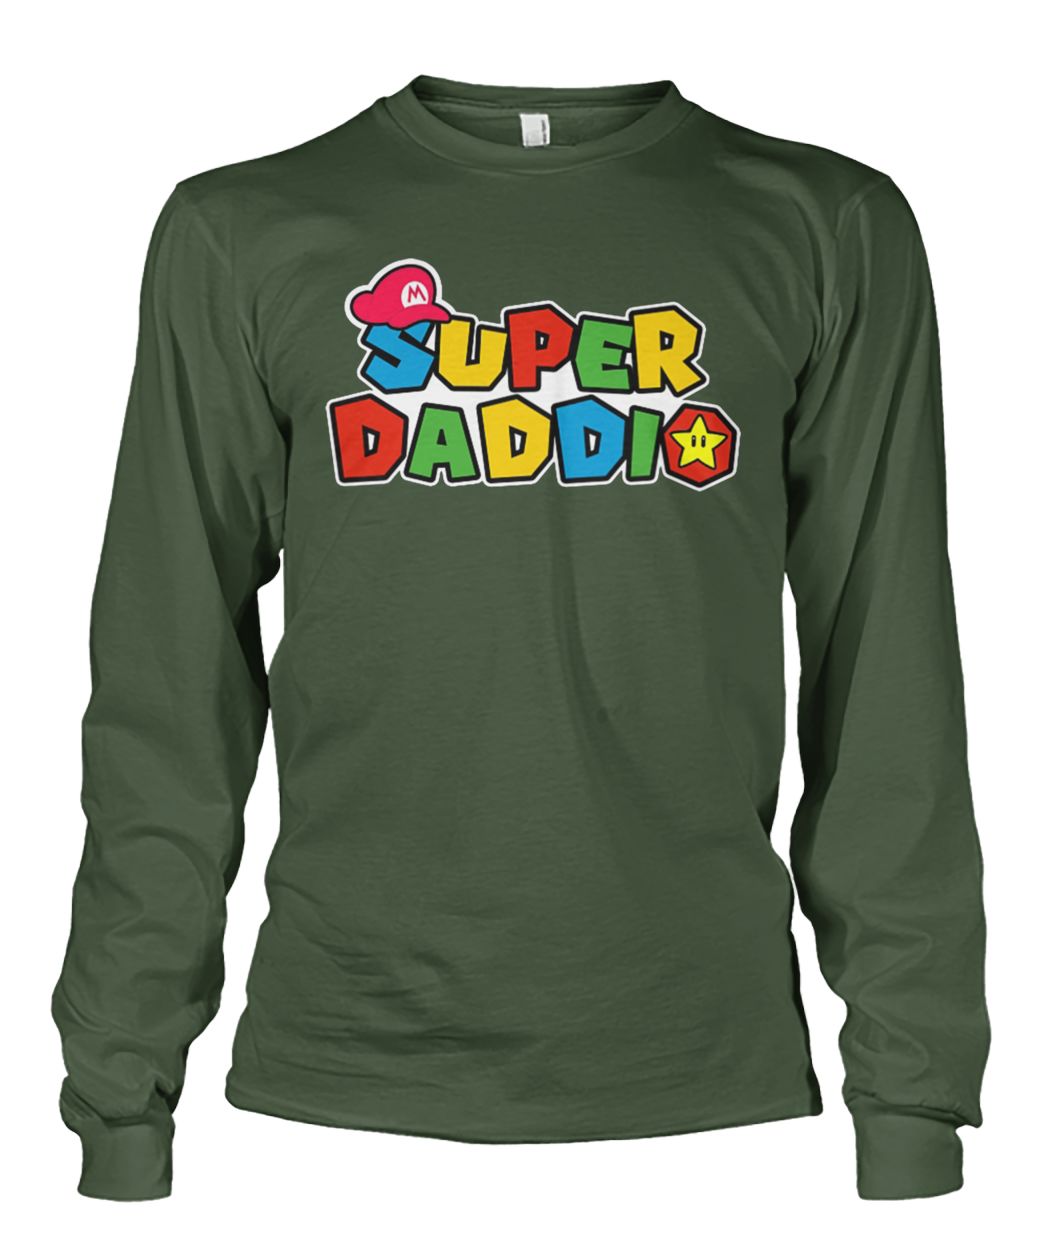 Mario dad super daddio unisex long sleeve